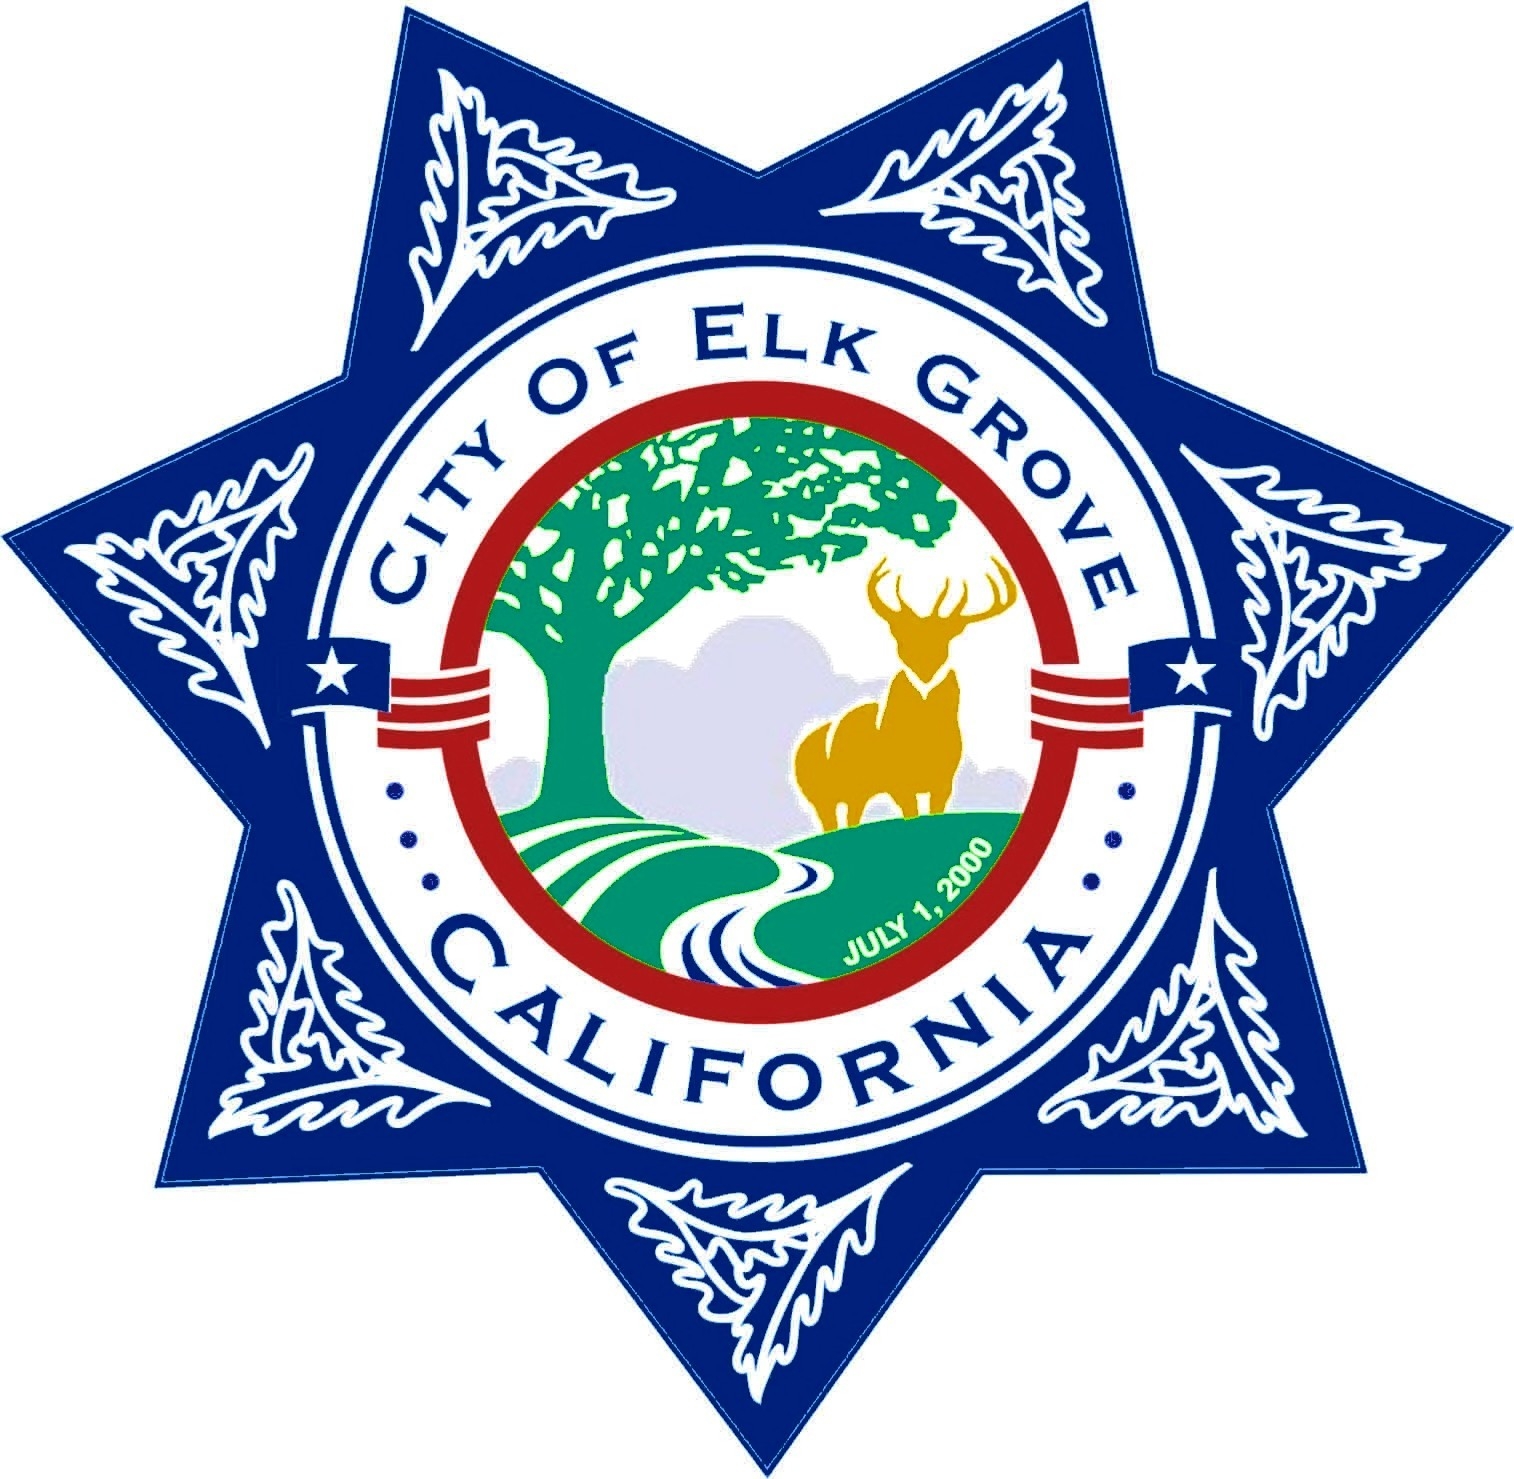 elk-grove-police-arrests-cellphone-thief-looking-for-driver-elk